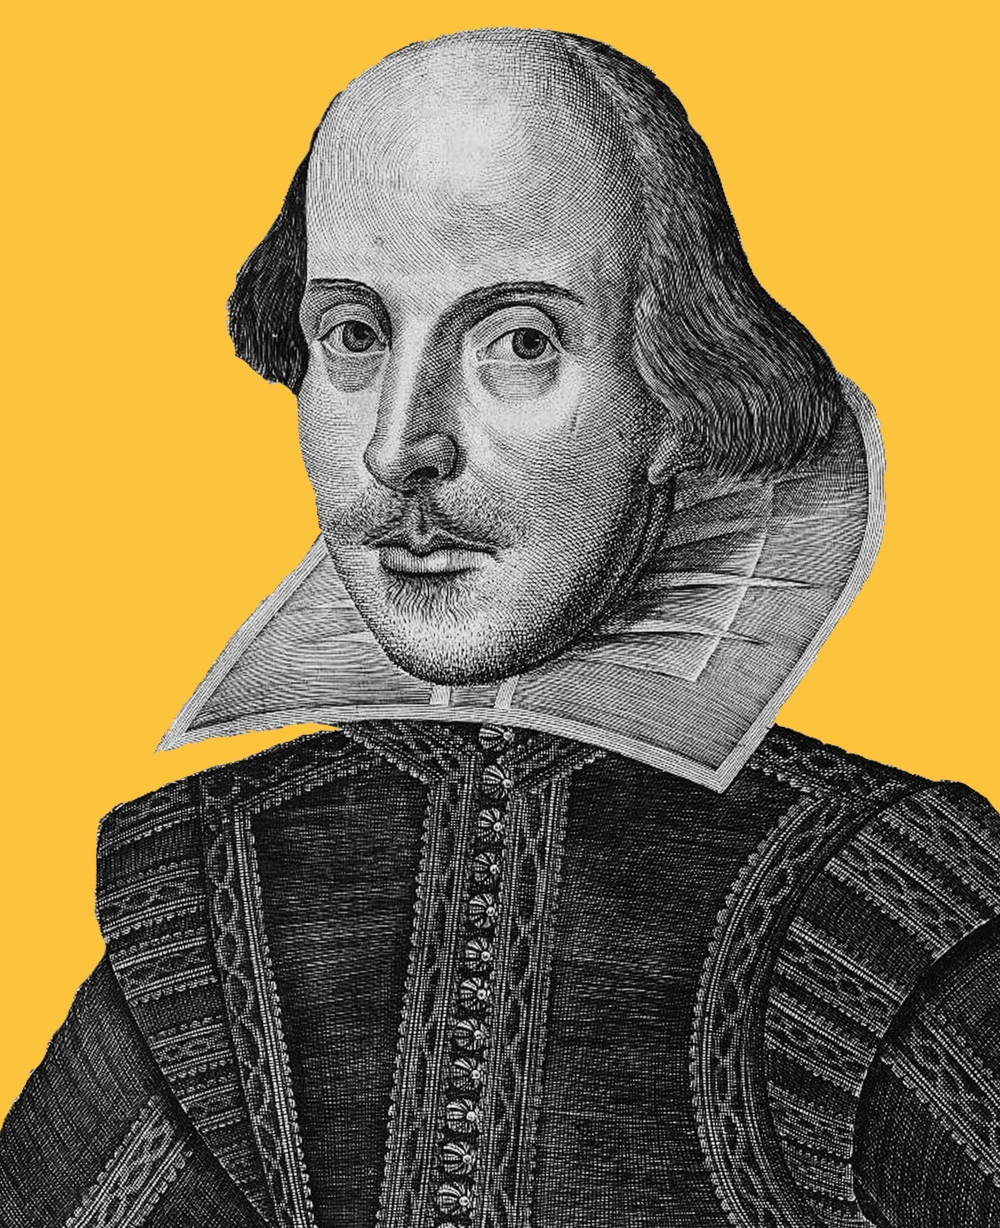 Shakespeare's world. Шекспир портрет Фолио. Портрет Шекспира из первого Фолио. Уильям Шекспир портрет.